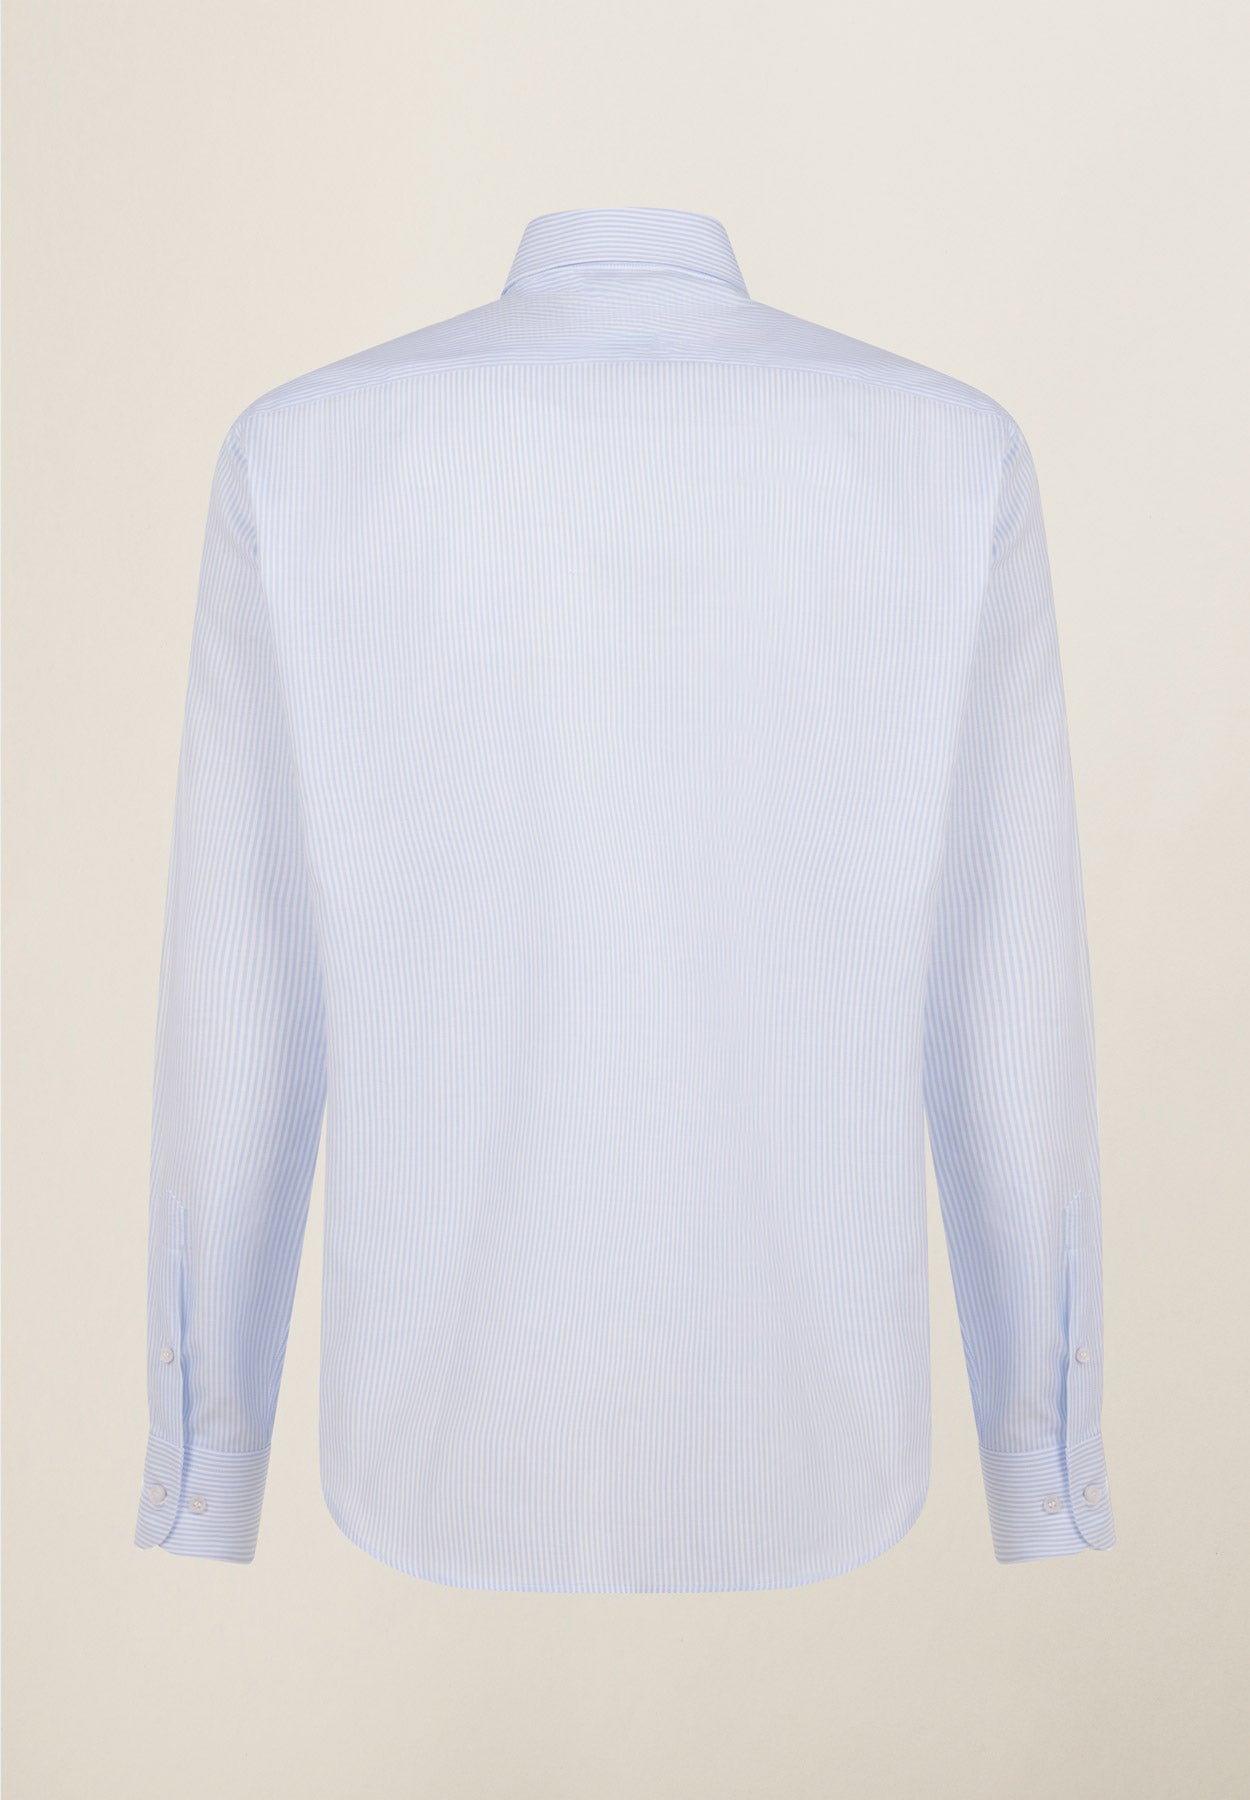 Light blue white striped shirt regular fit cotton